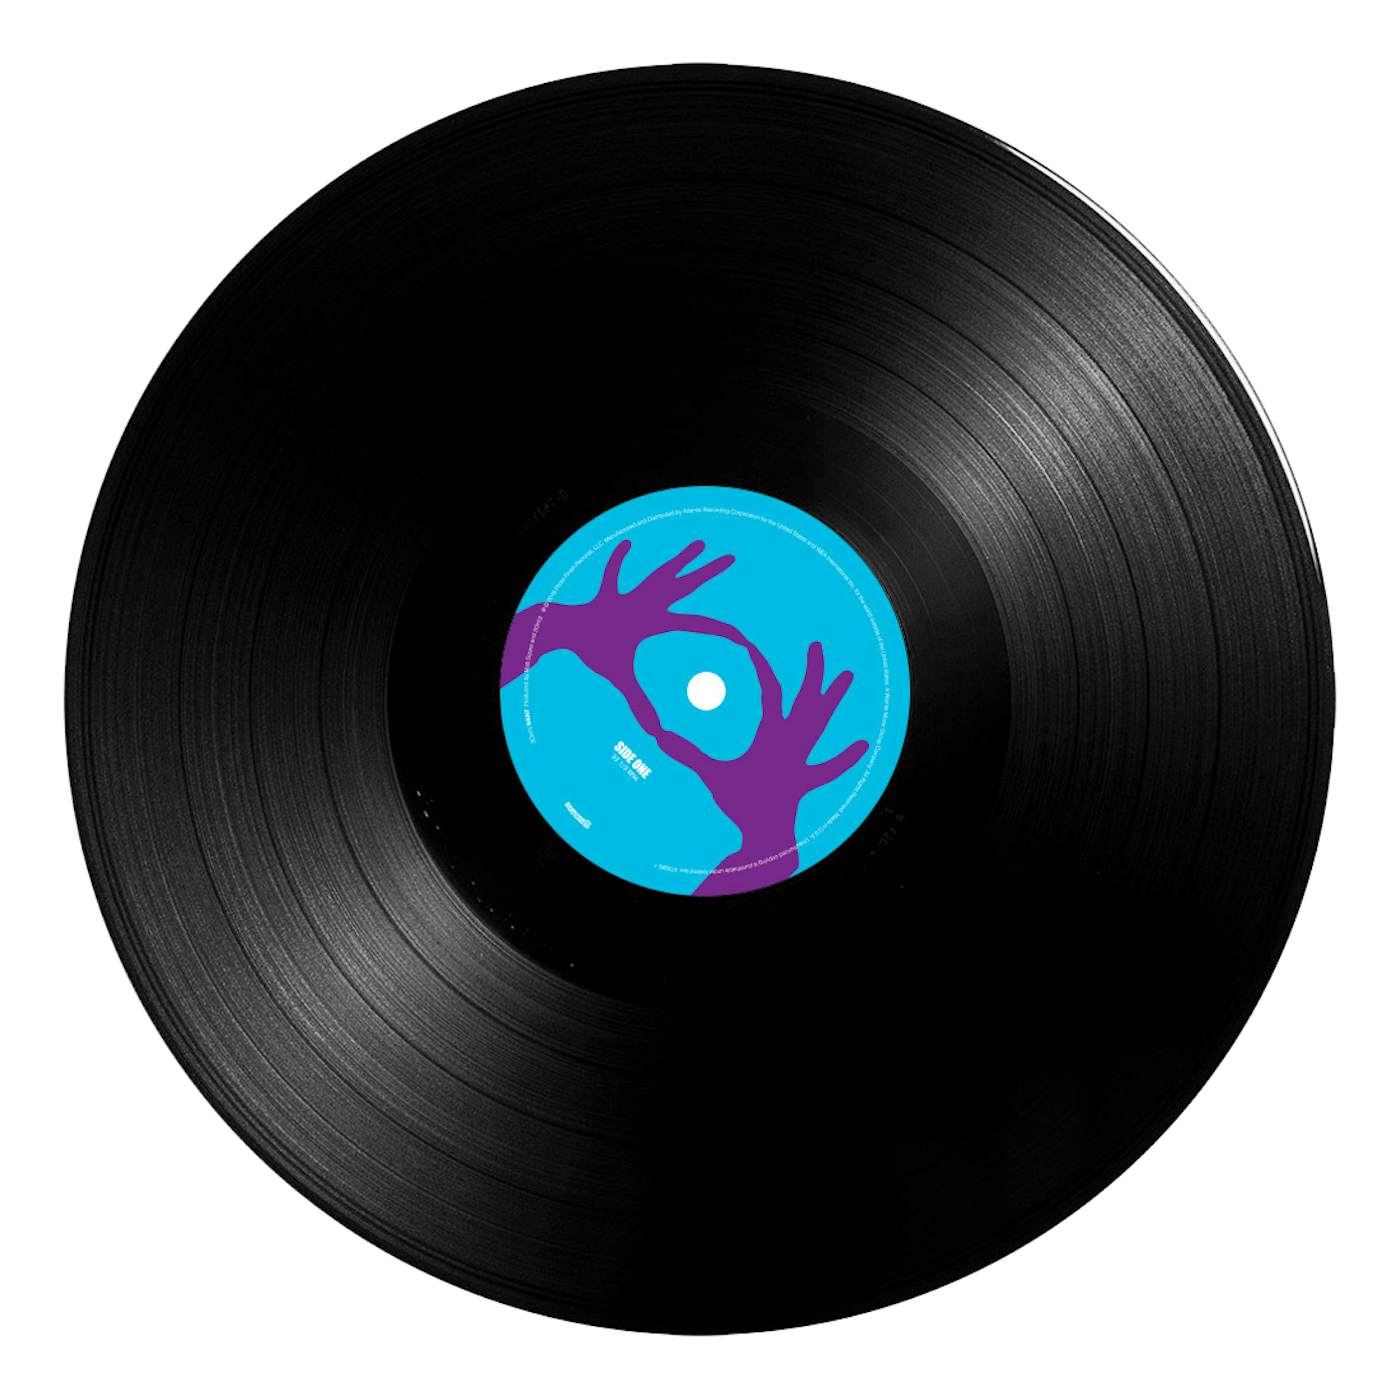 3OH!3 WANT 10-Year Anniversary Vinyl (Black)